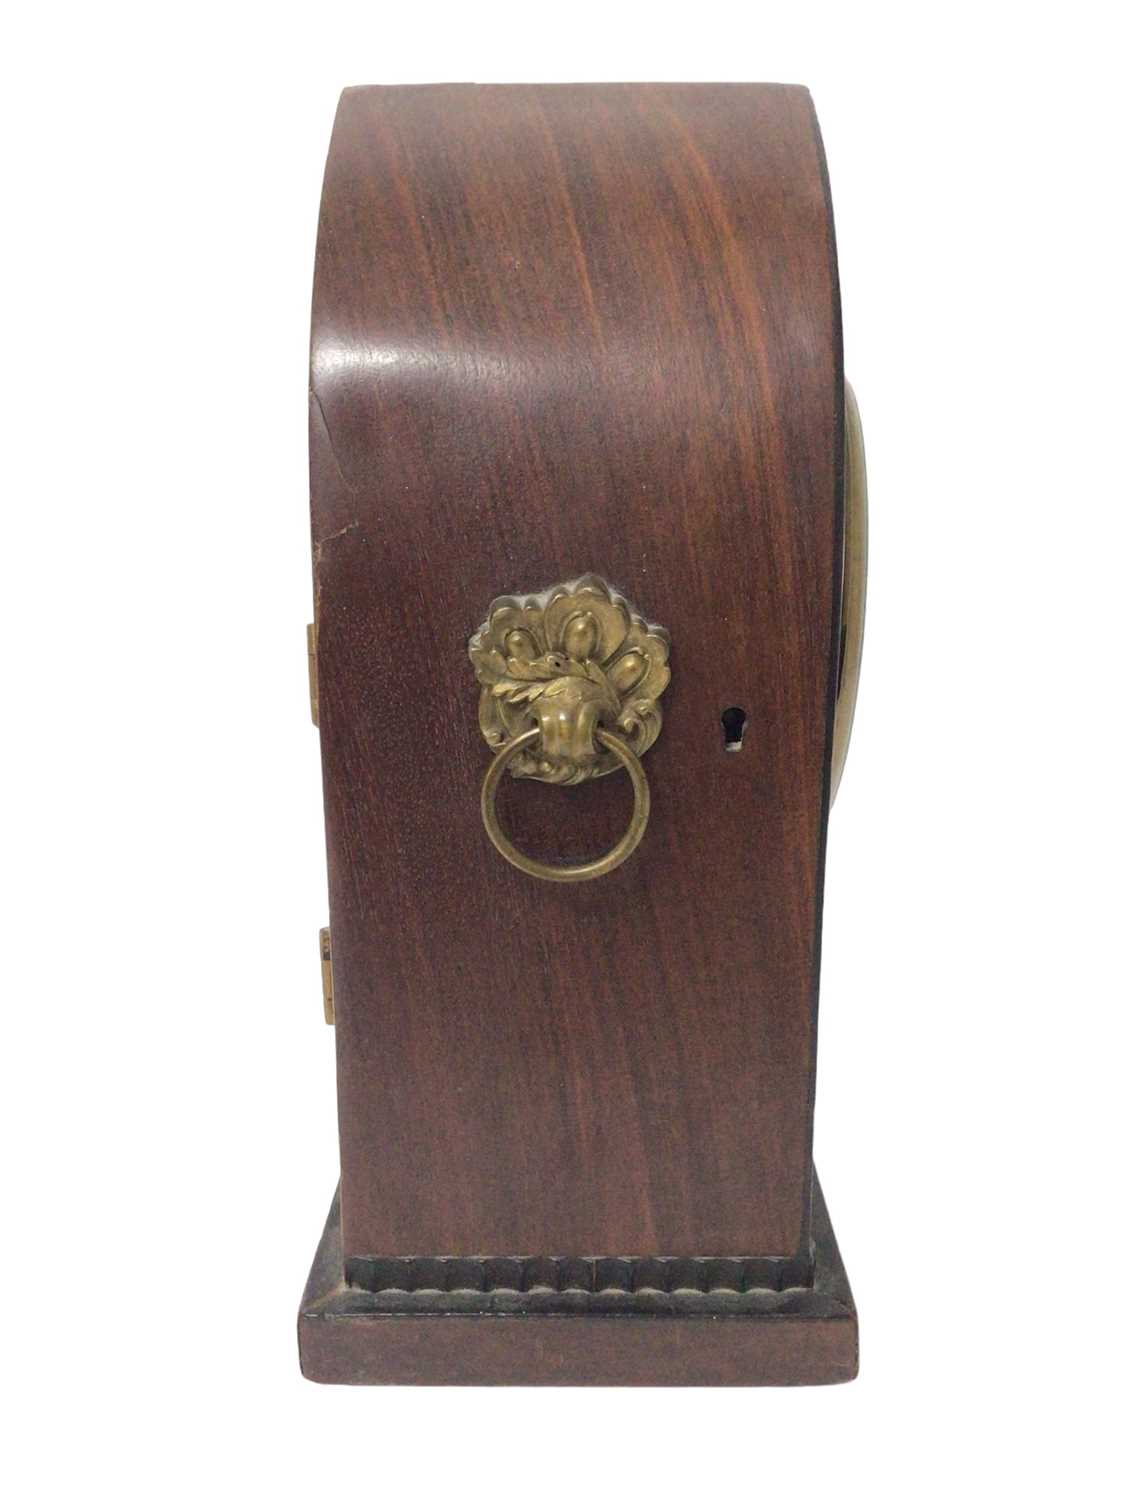 19th century mahogany and brass inlaid lancet shaped bracket clock - Image 4 of 6